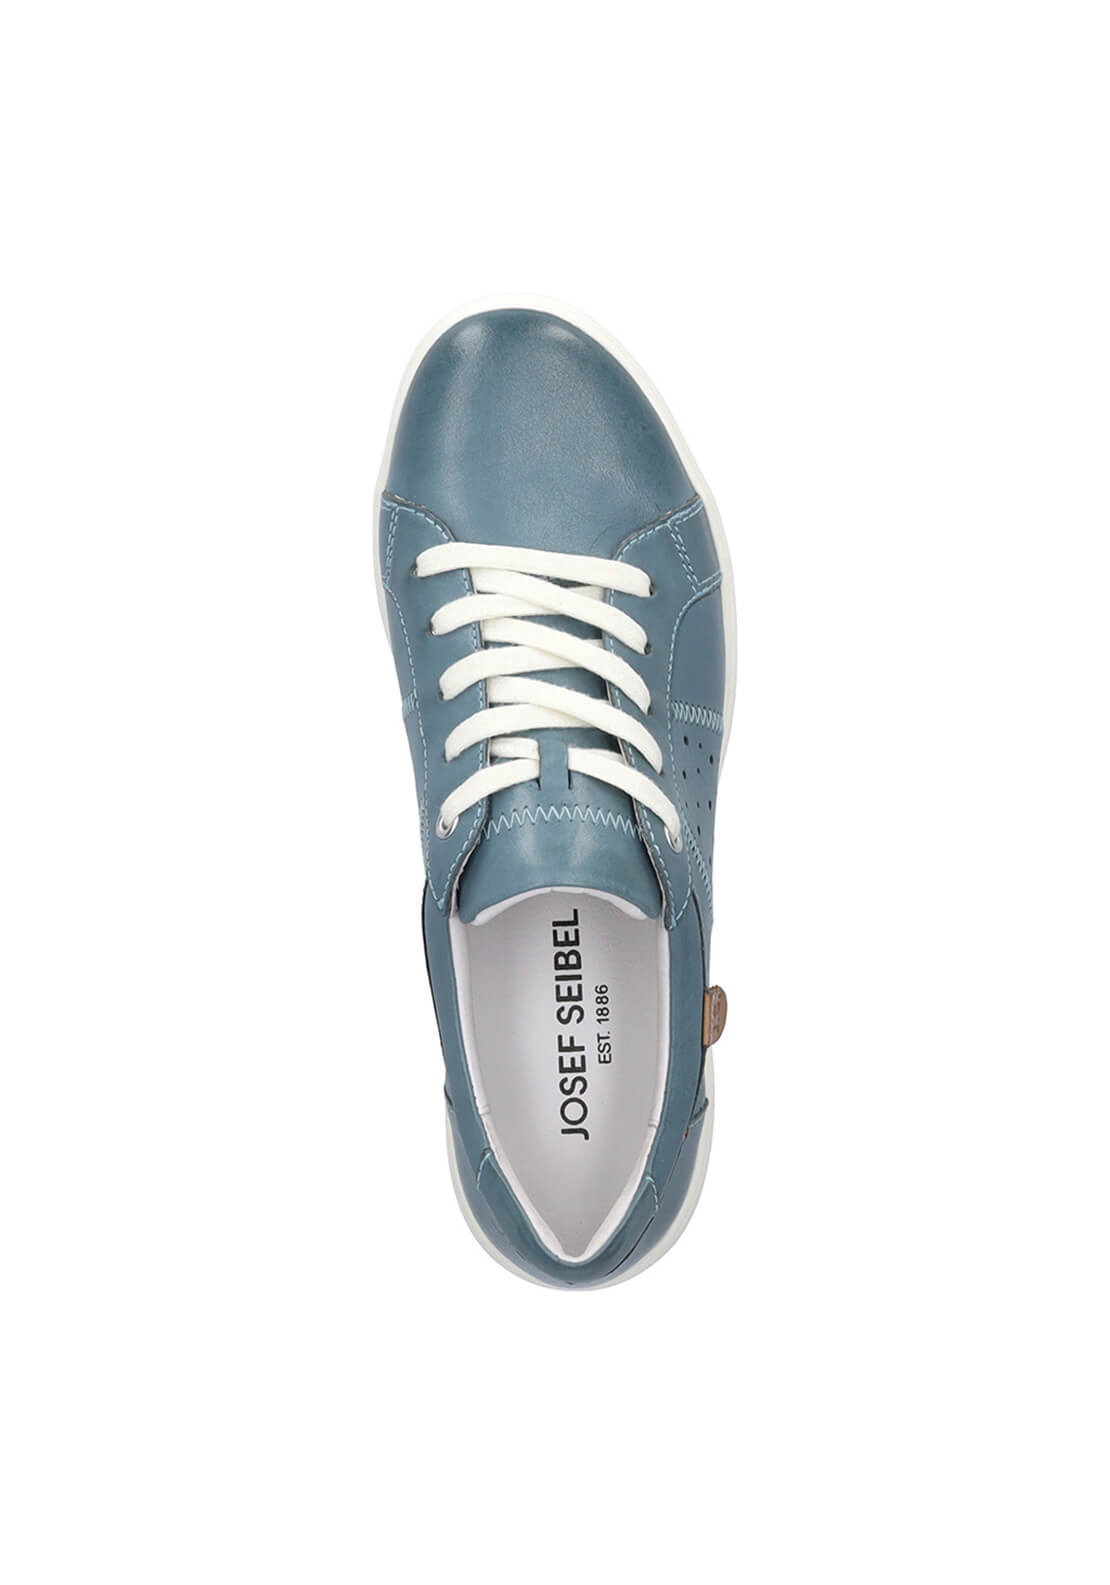 Josef Seibel Caren 01 Shoes - Blue 4 Shaws Department Stores